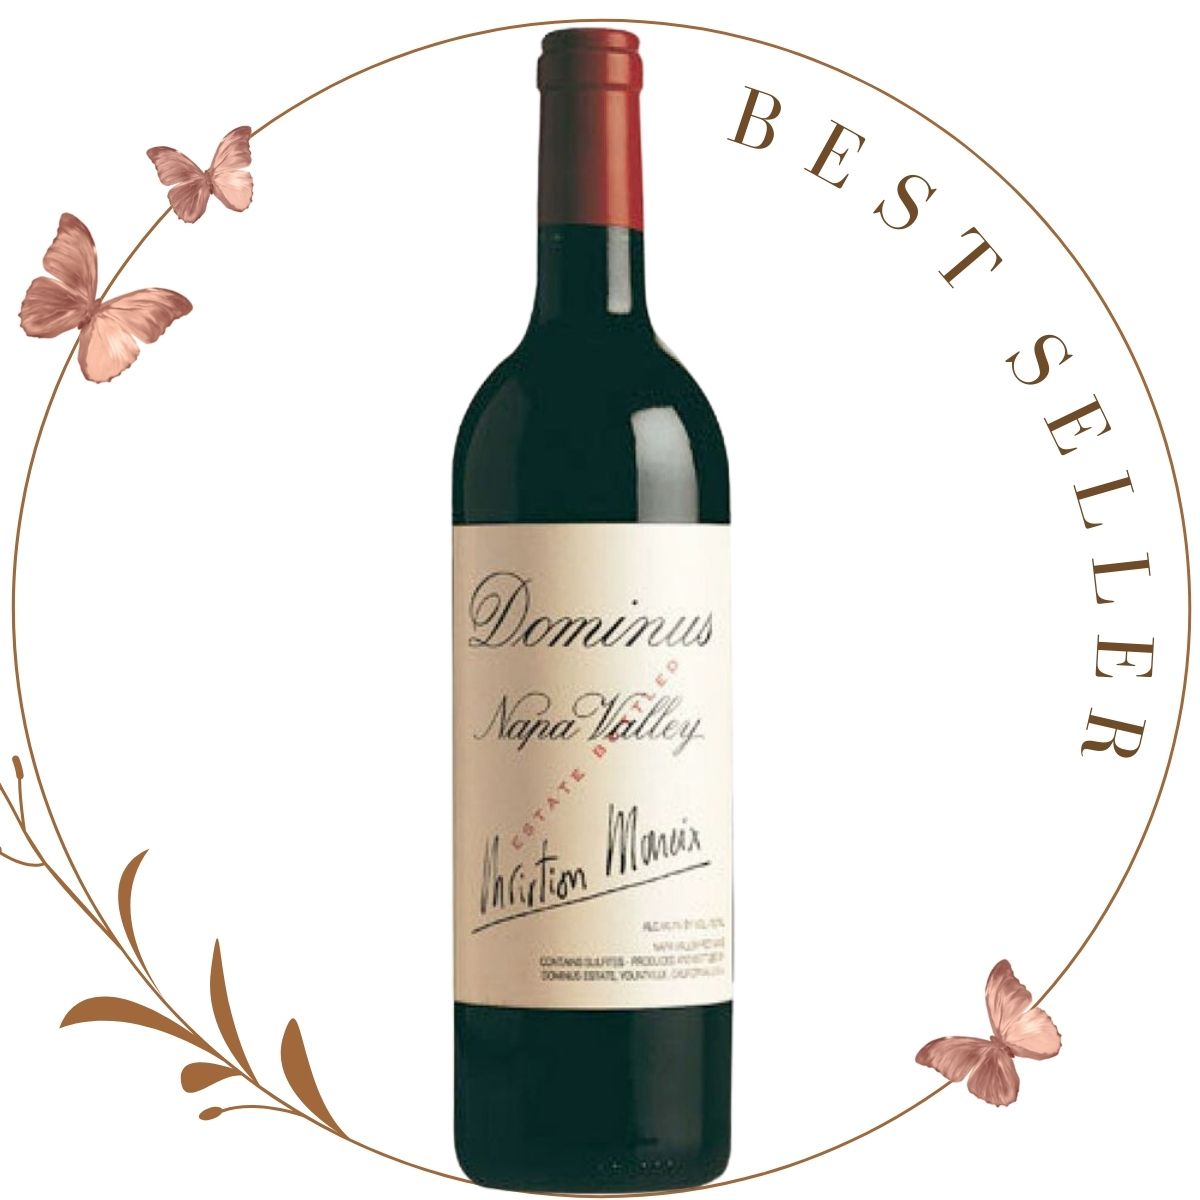 2017 Dominus estate bordeaux blend, dominus wine napa valley, american wine